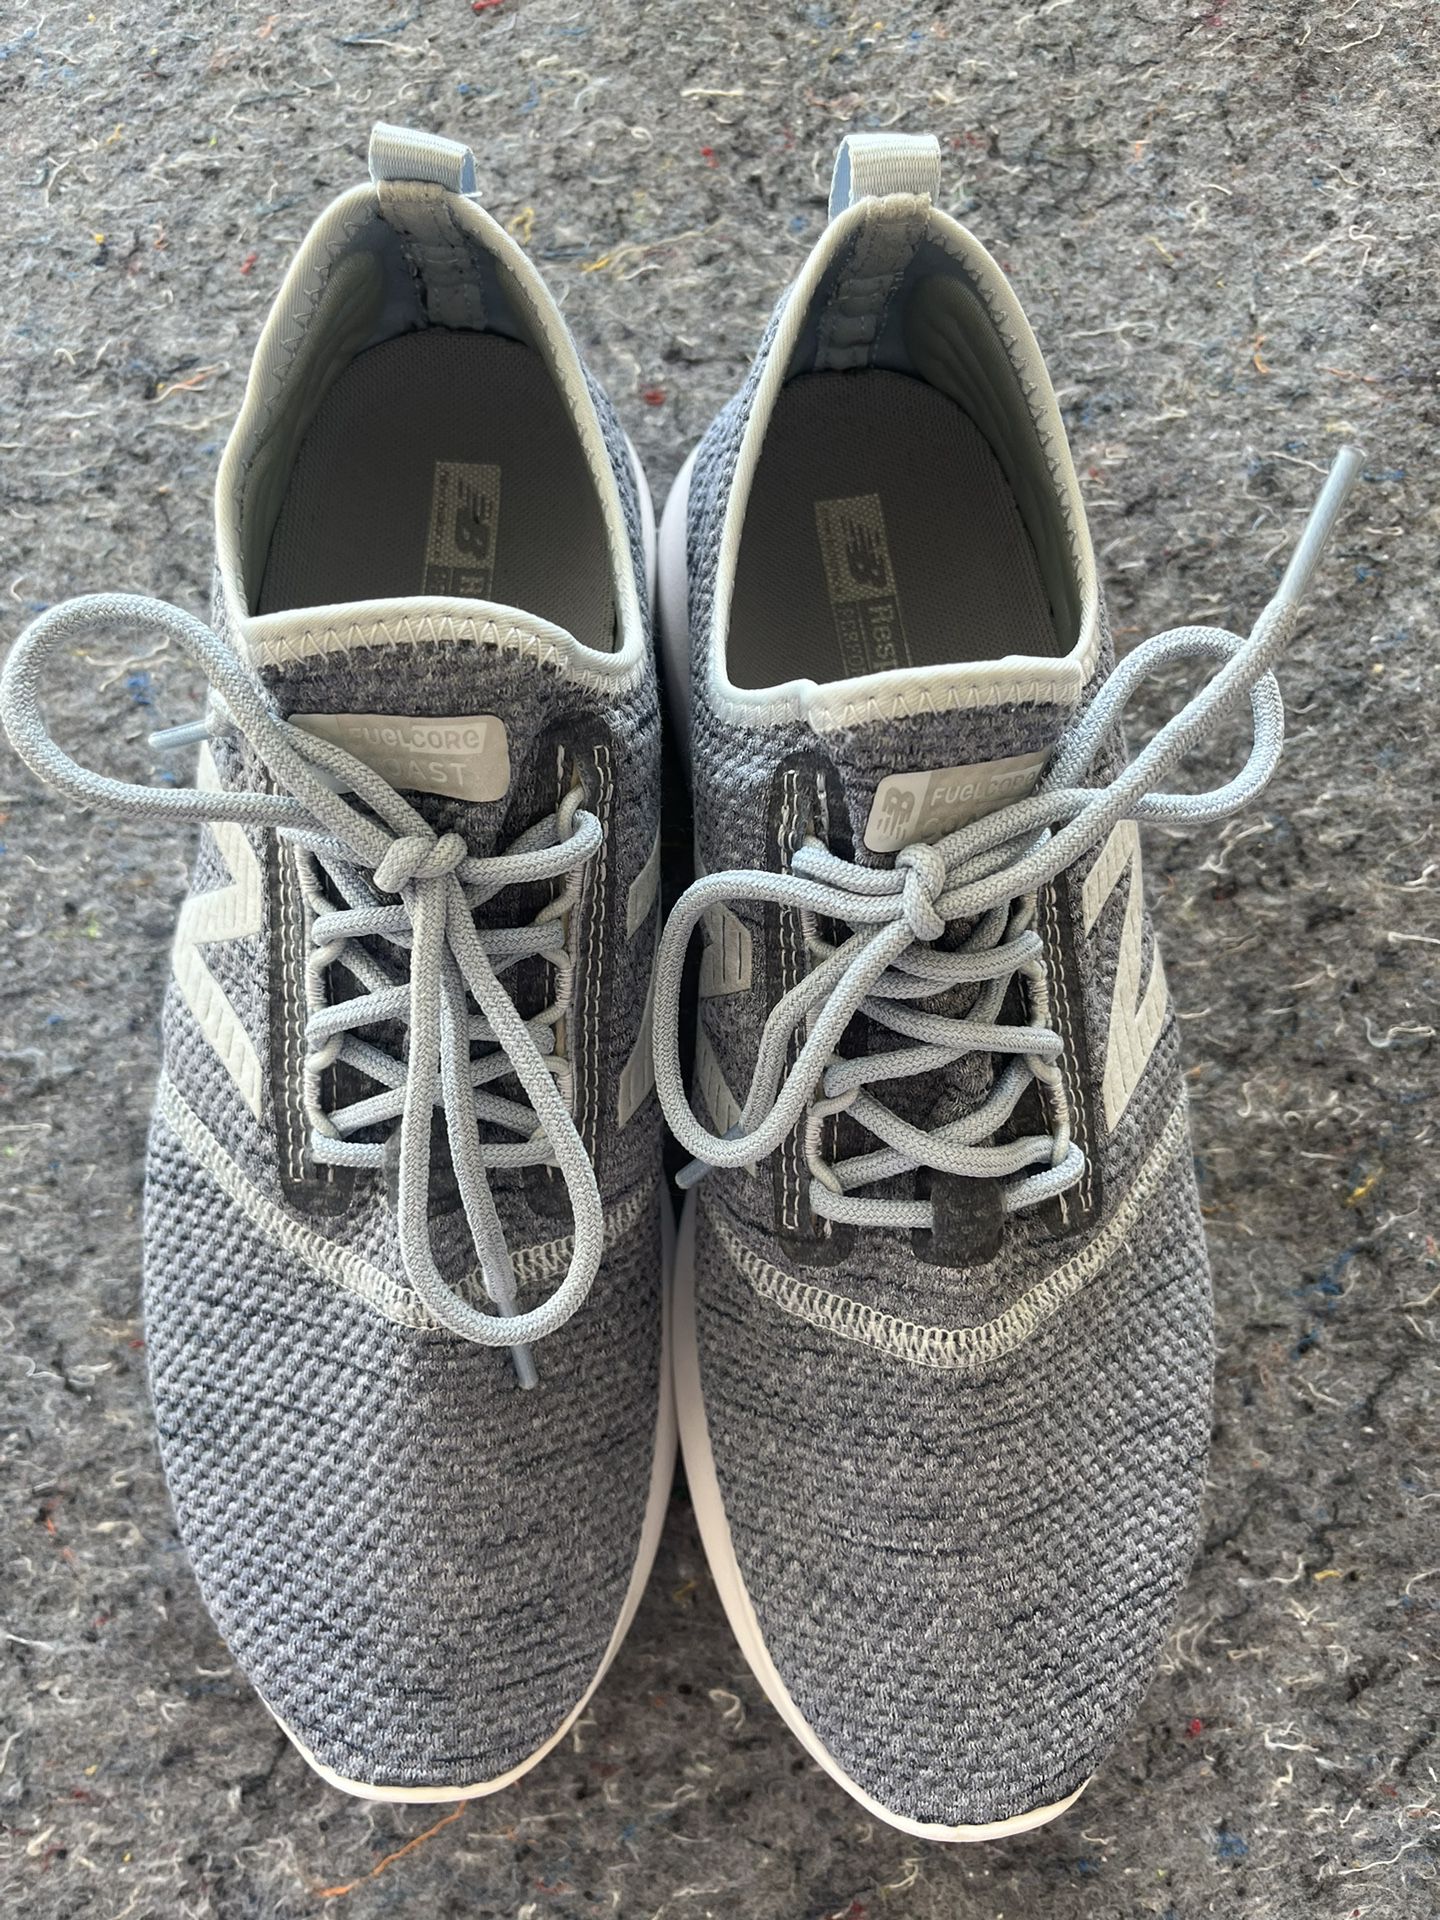 New Balance women’s shoes 9 1/2 Grey.